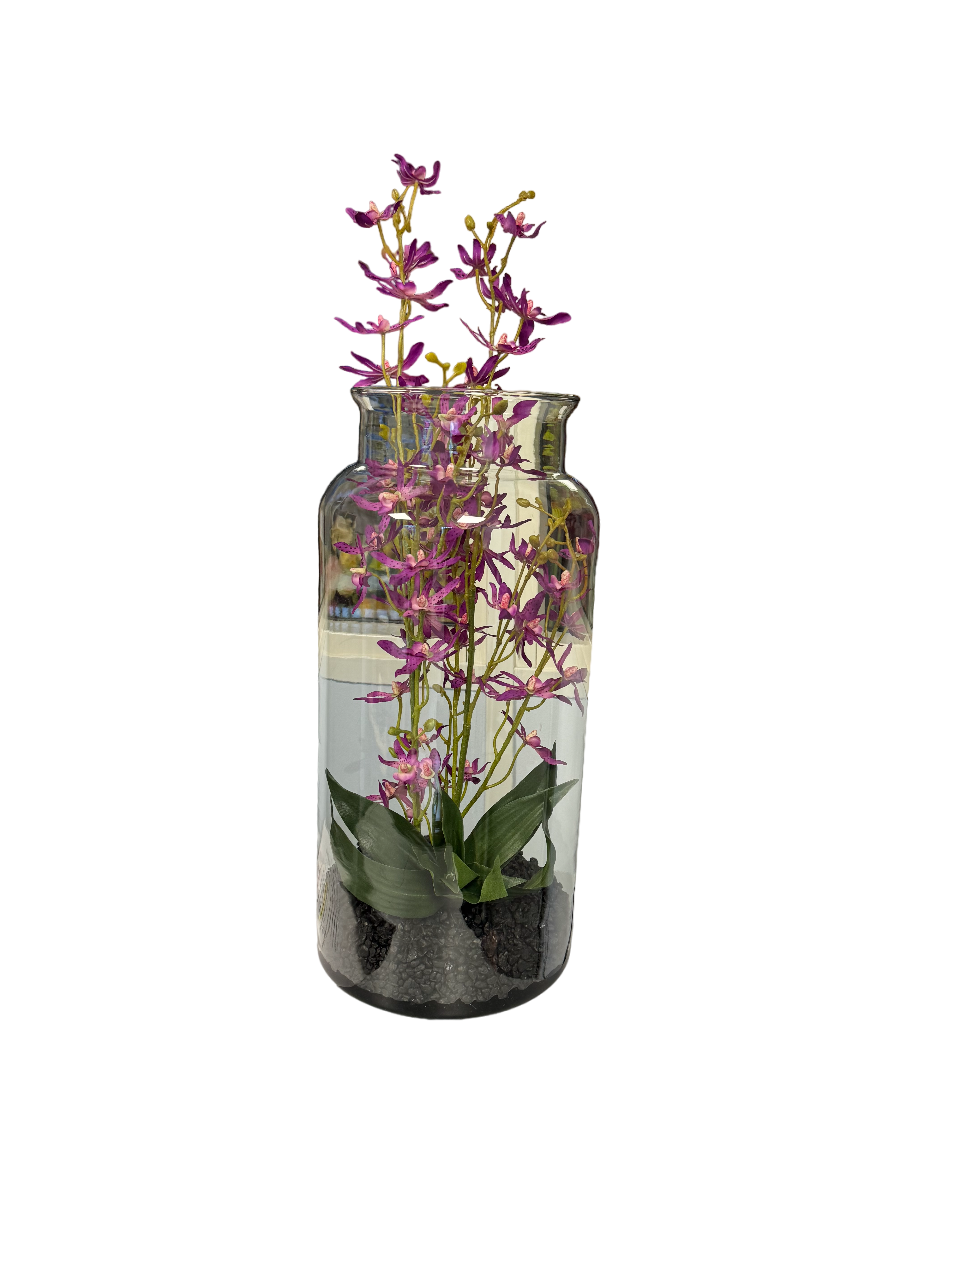 https://www.flower-genie.co.uk/profile/Orchids inset in vase